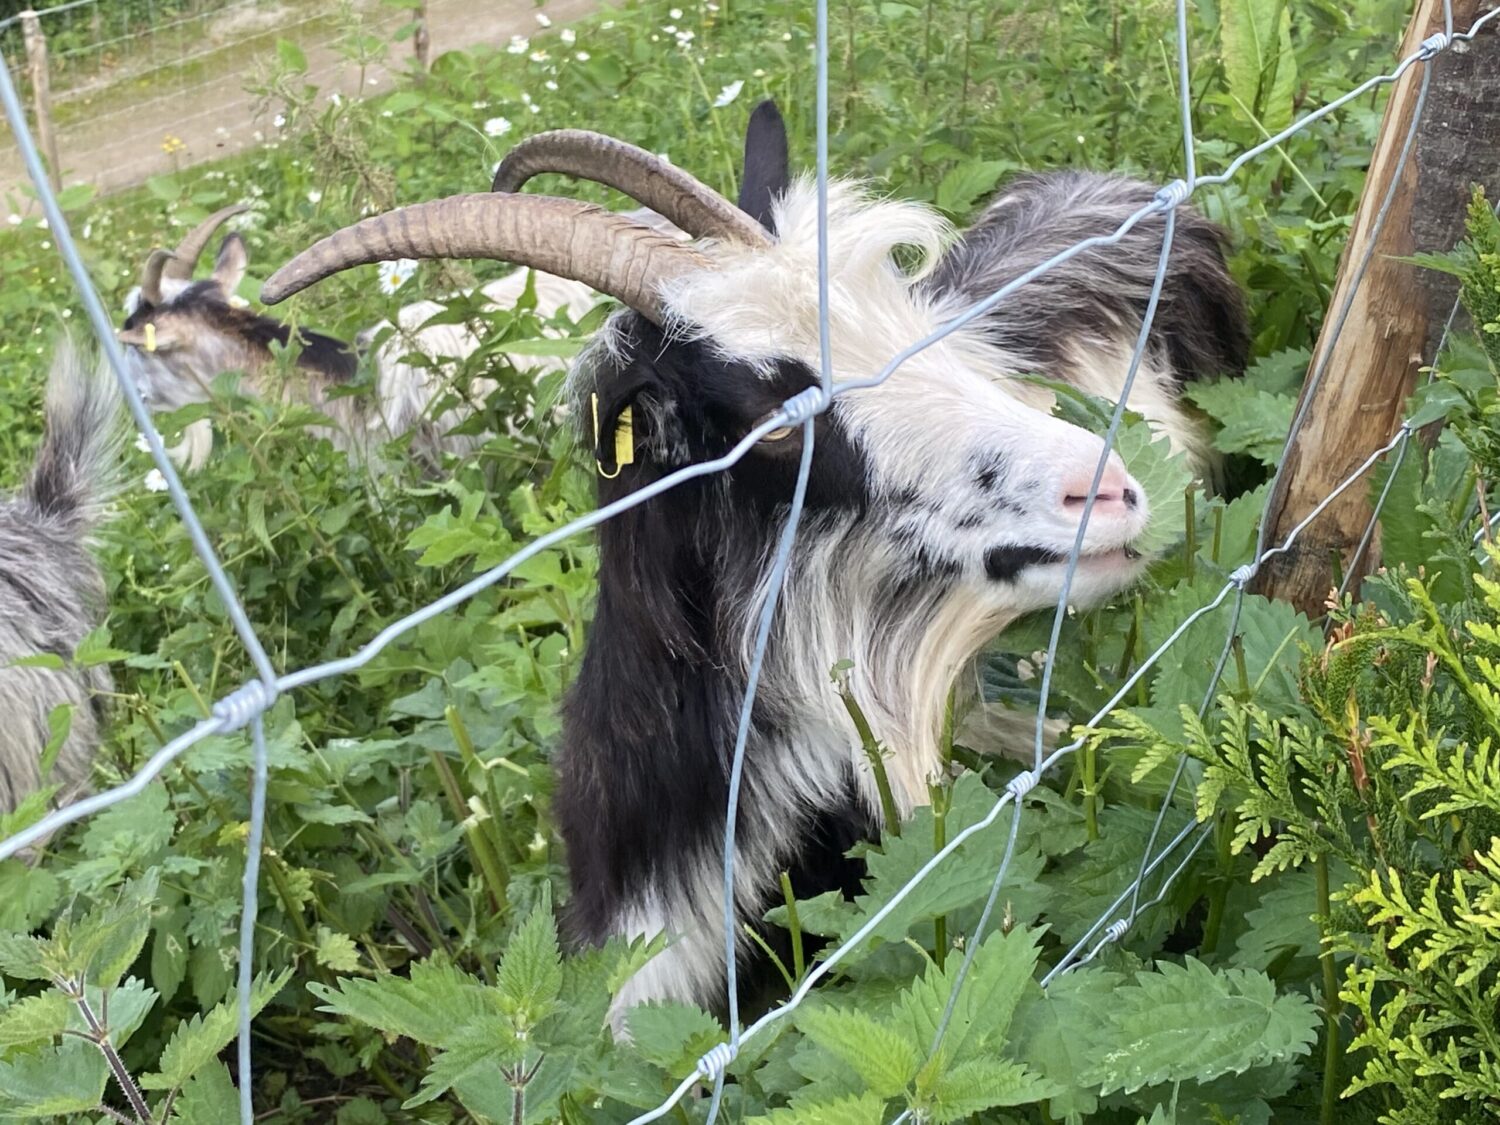 Goat peering through fence in Arras